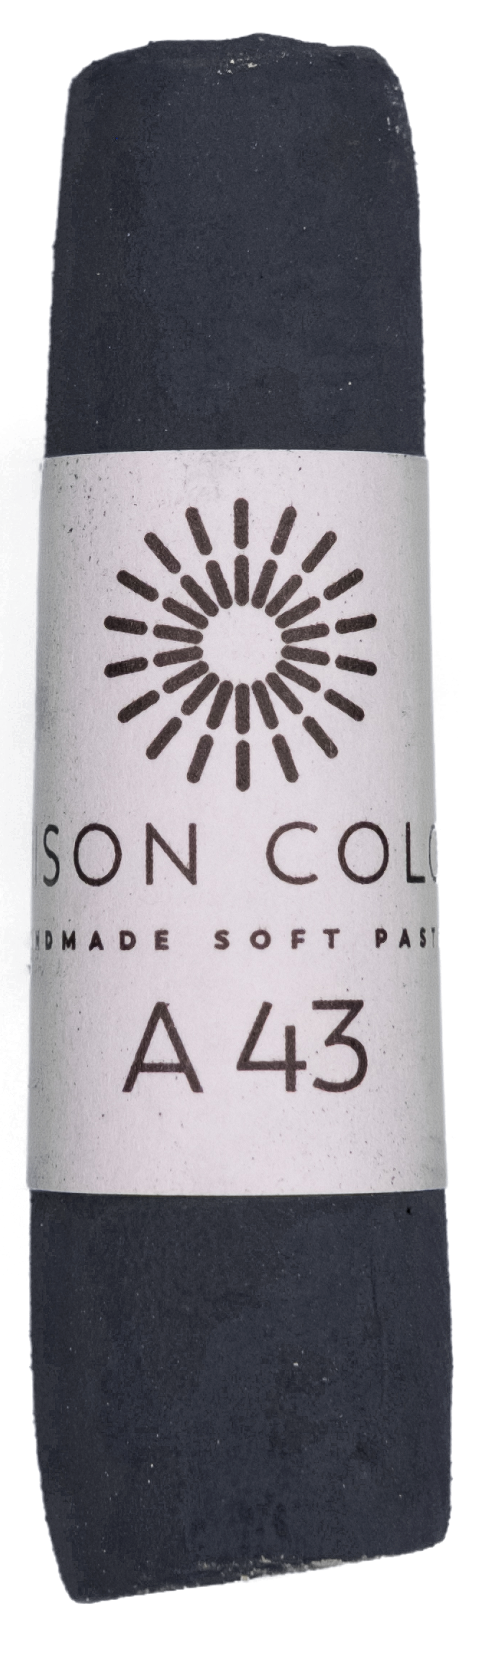 Unison Colour Handmade Soft Pastels Additional 43 Charcoal - Size Regular